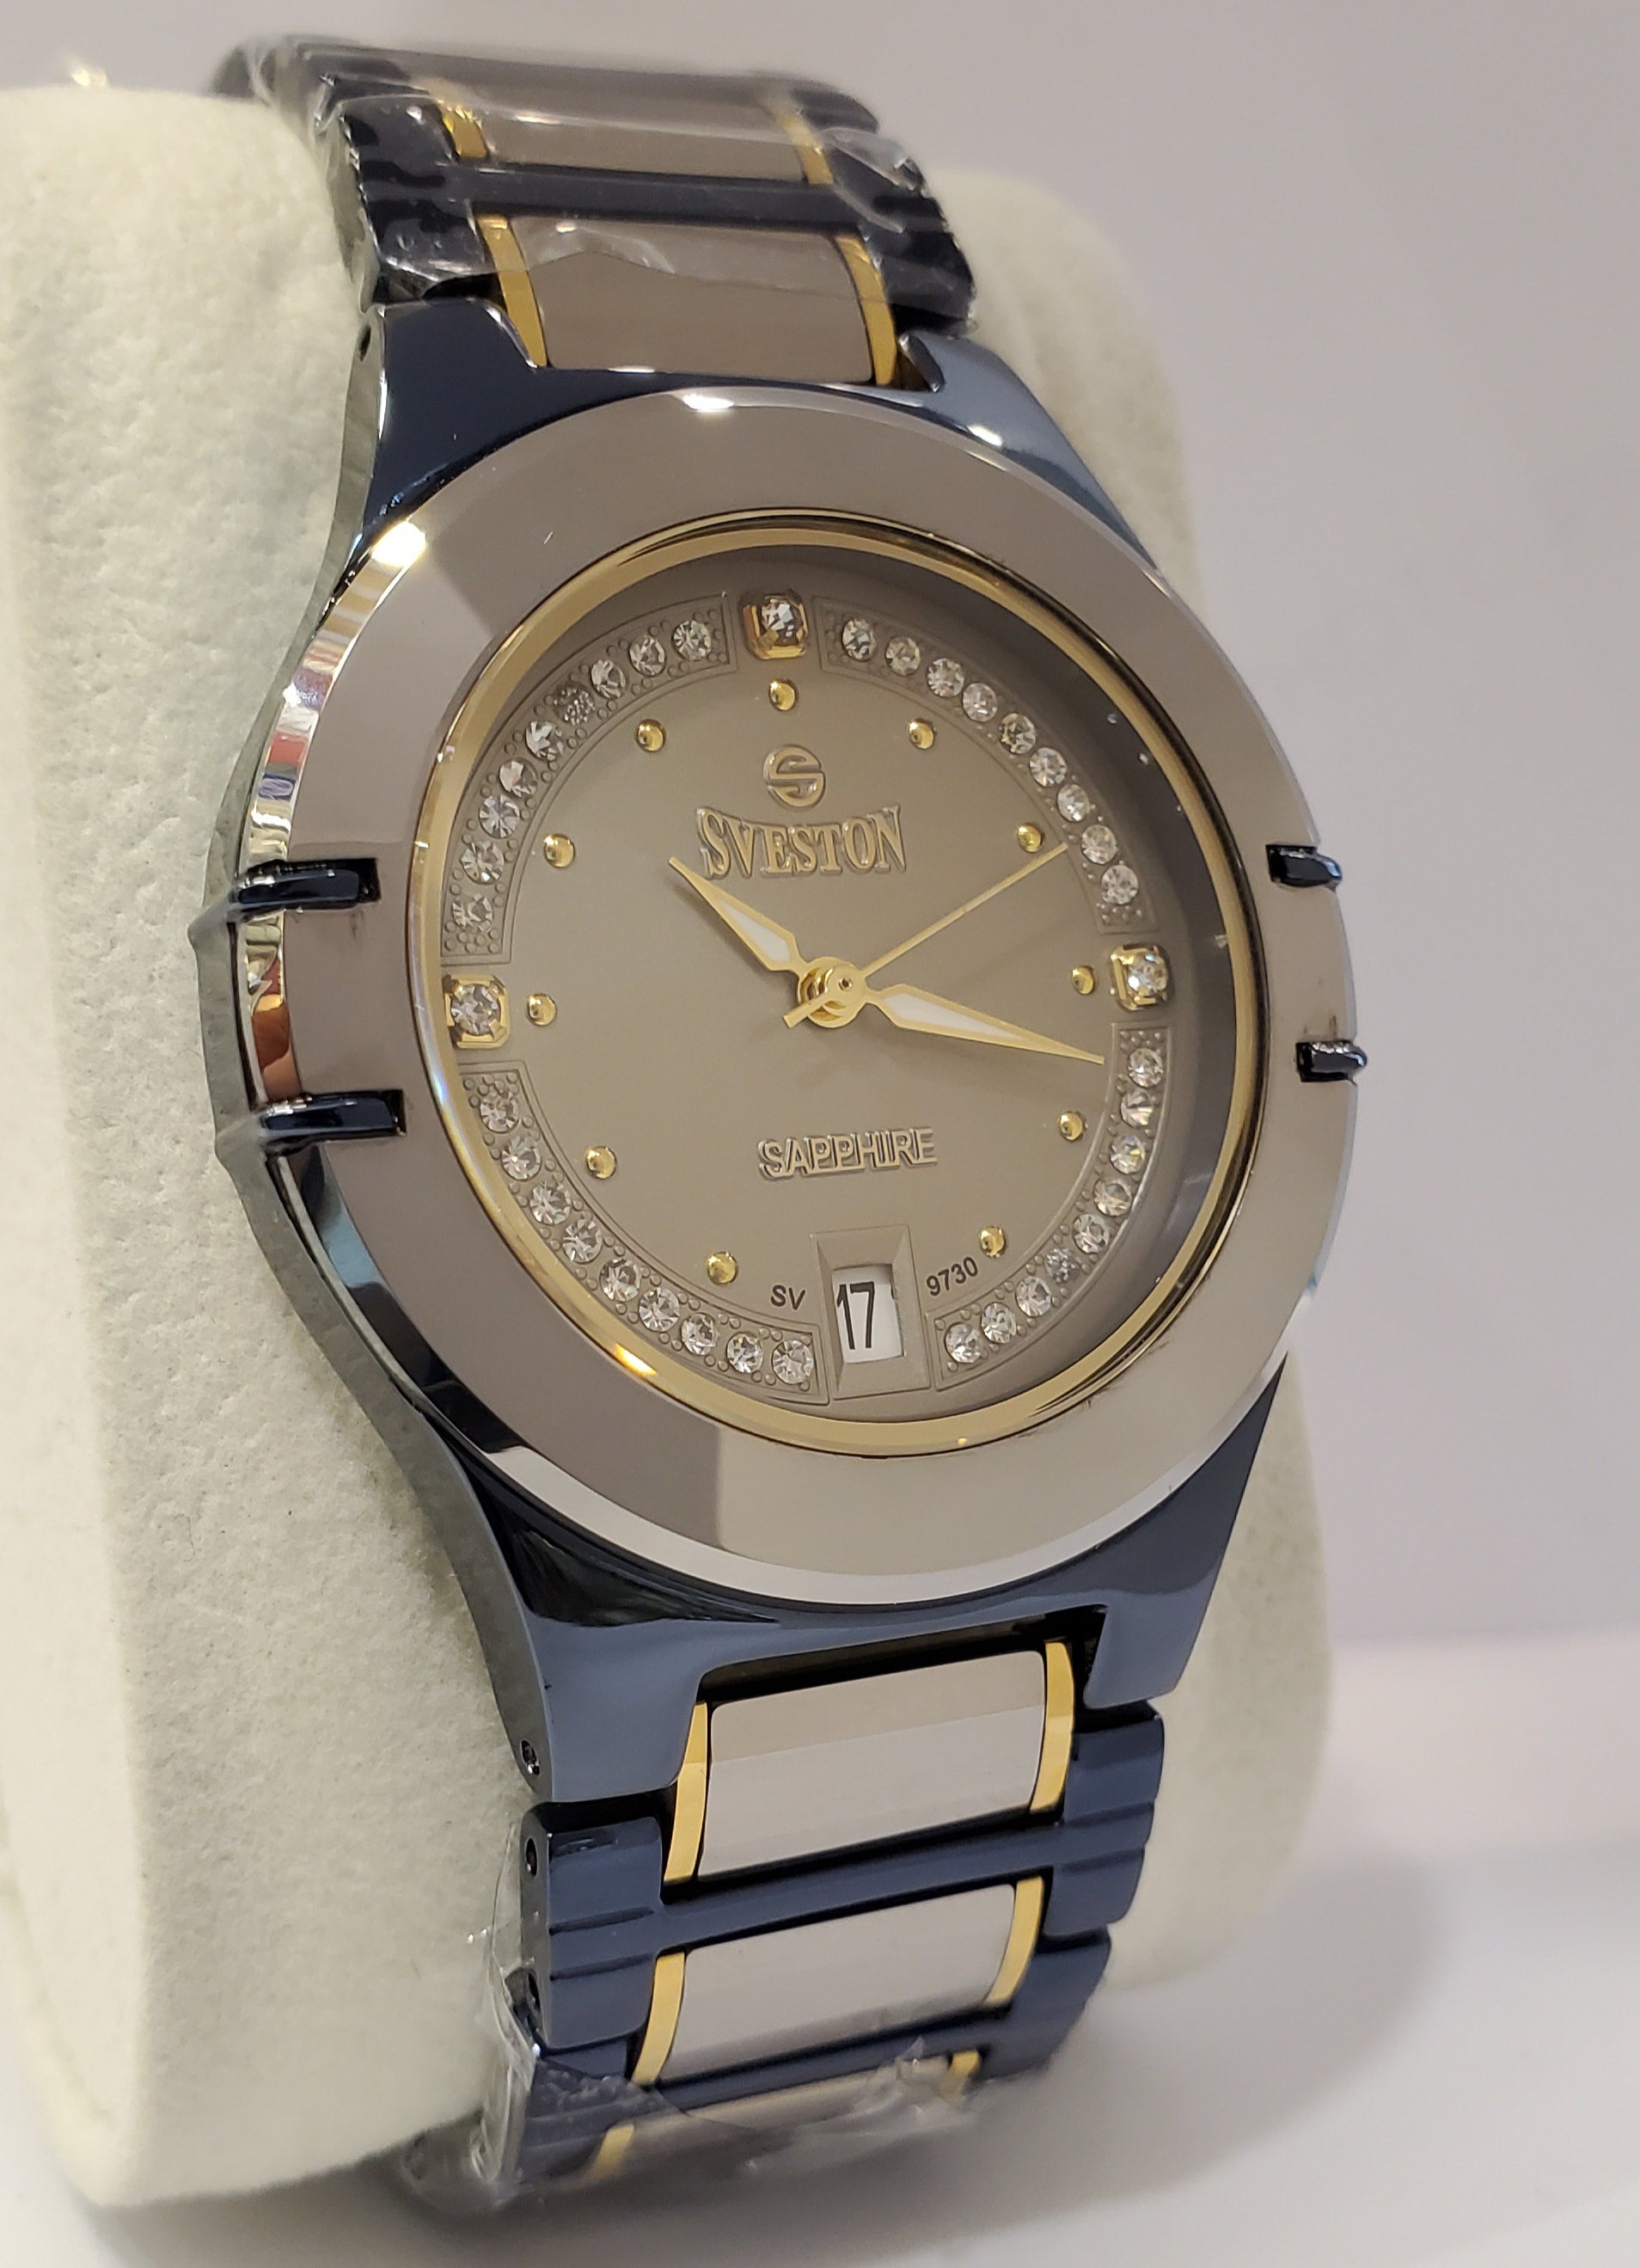 Sveston Watches - Designed for extremes. Shahid Afridi... | Facebook